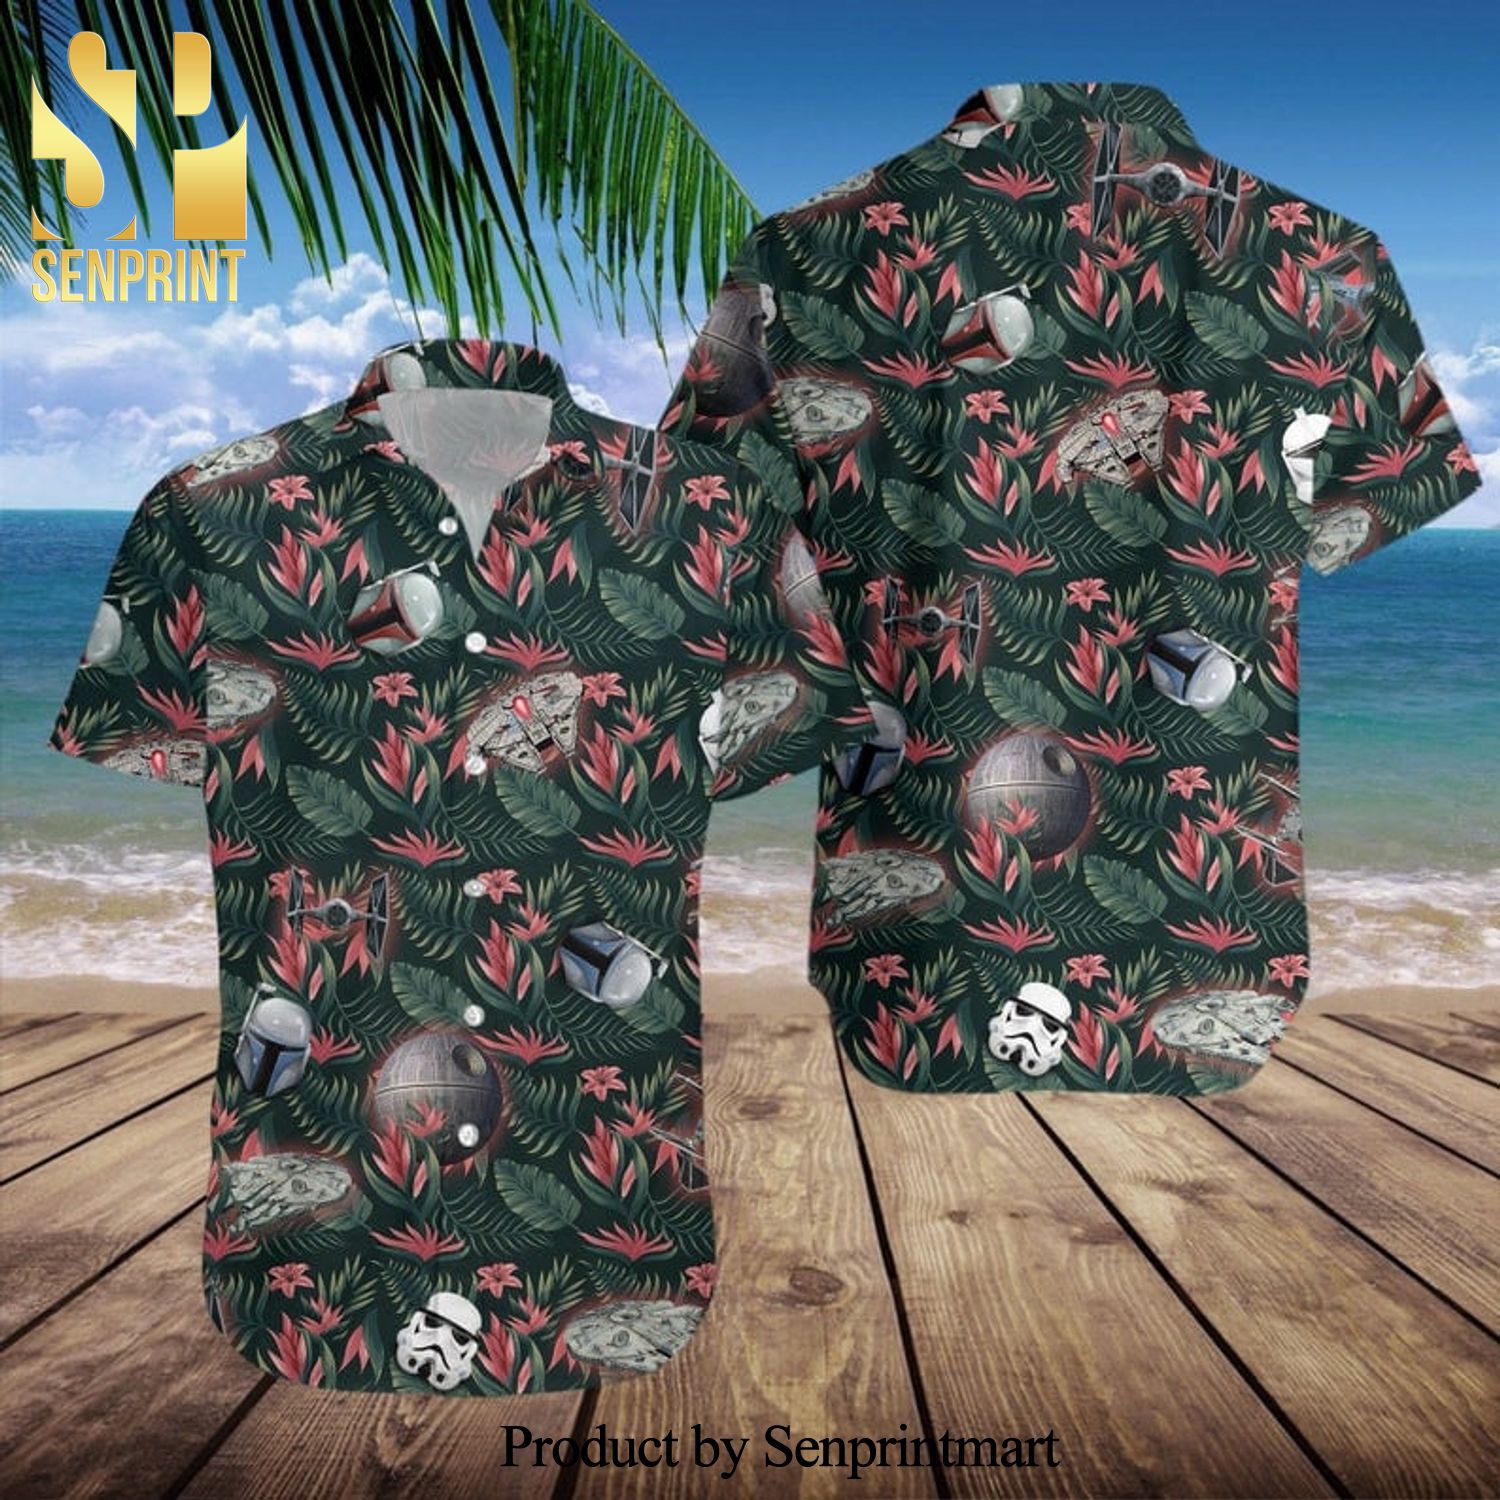 Millennium Falcon Ship Stormtrooper Star Wars Tropical Full Printing Hawaiian Shirt – Green